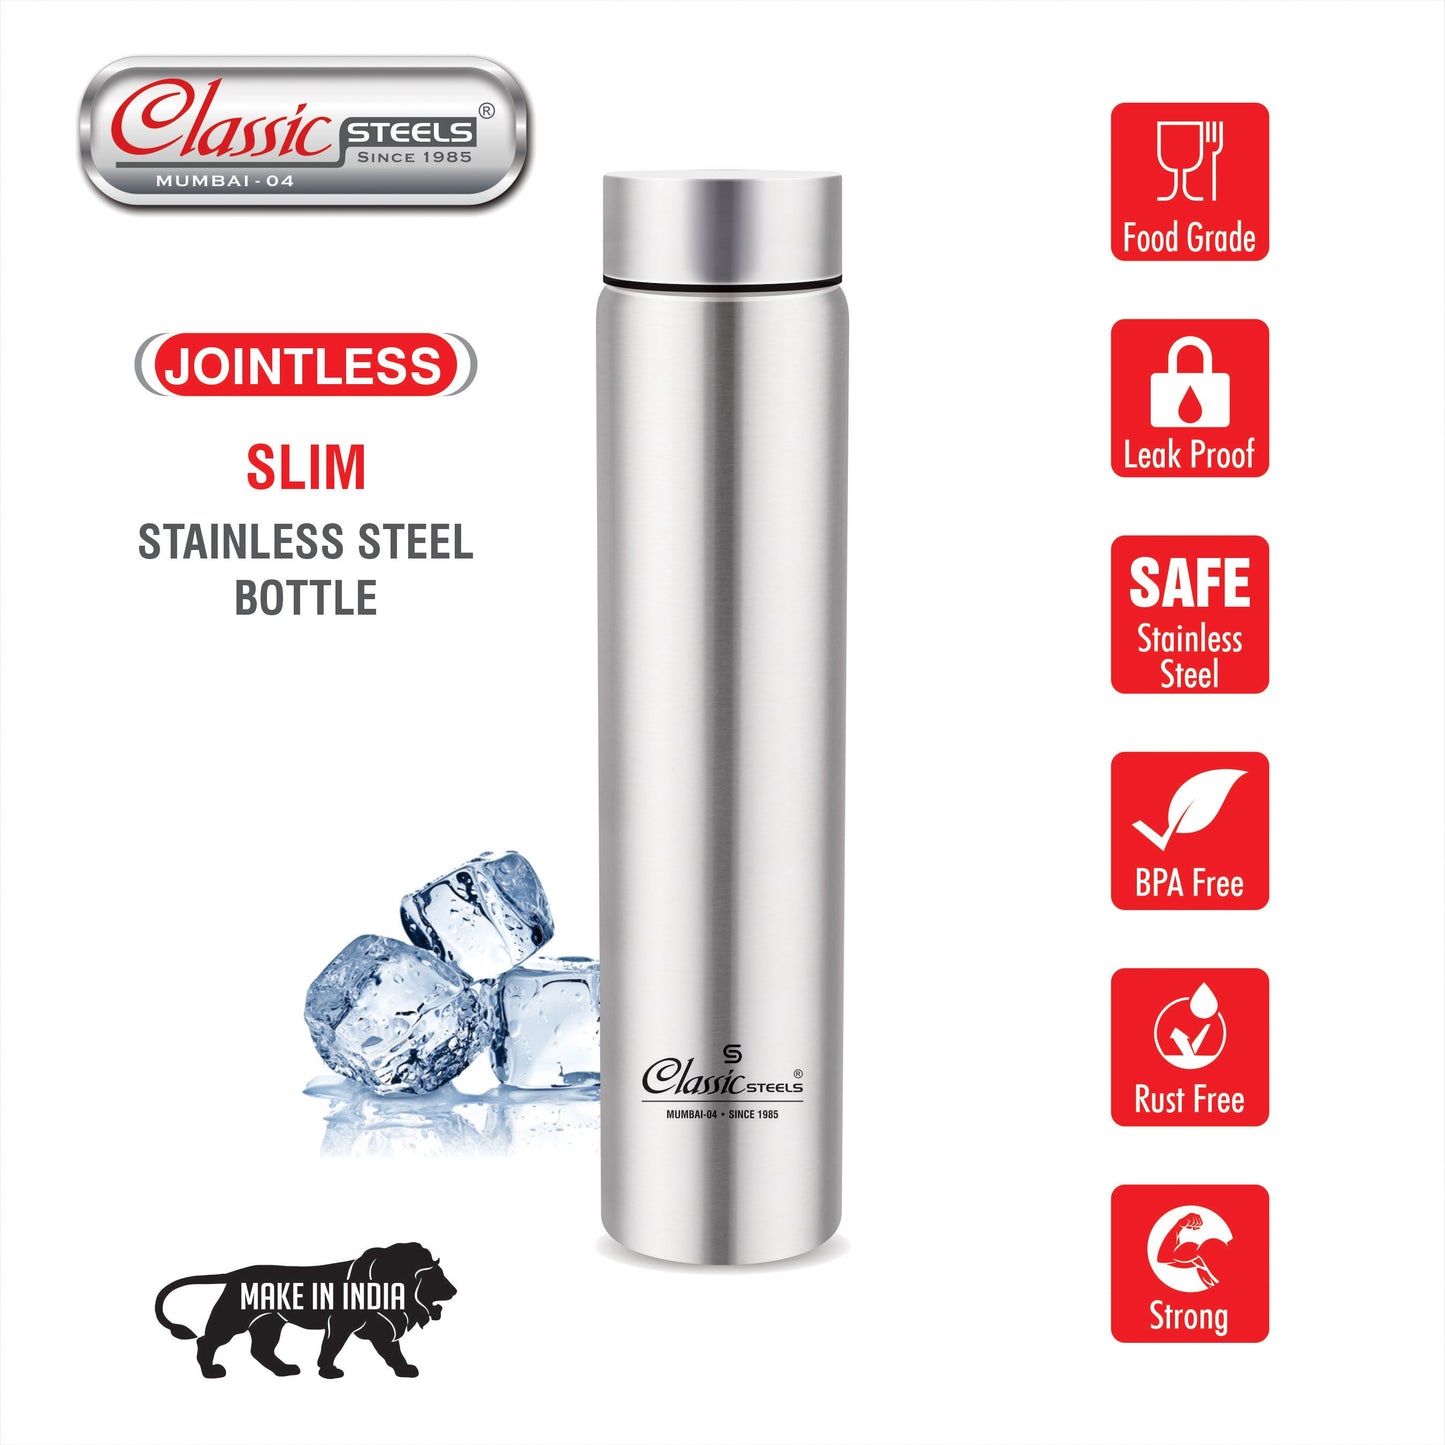 Slim (jointless) Single Wall Stainless Steel Classic Steels